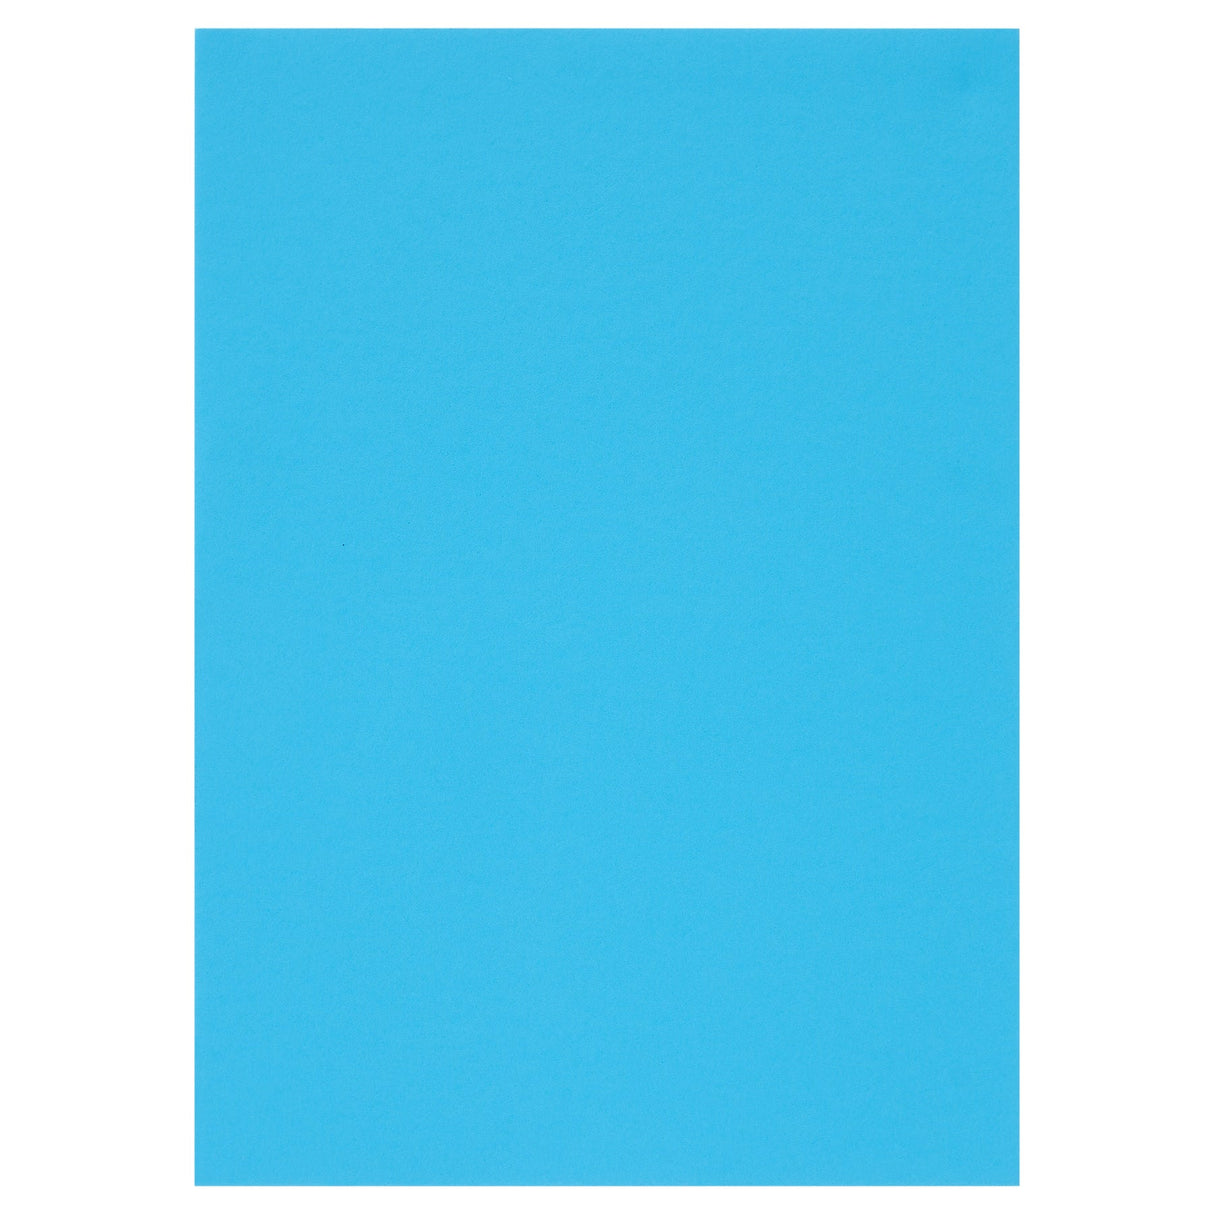 Premier Activity A4 Card - 160 gsm - Turquoise - 50 Sheets-Craft Paper & Card-Premier|StationeryShop.co.uk